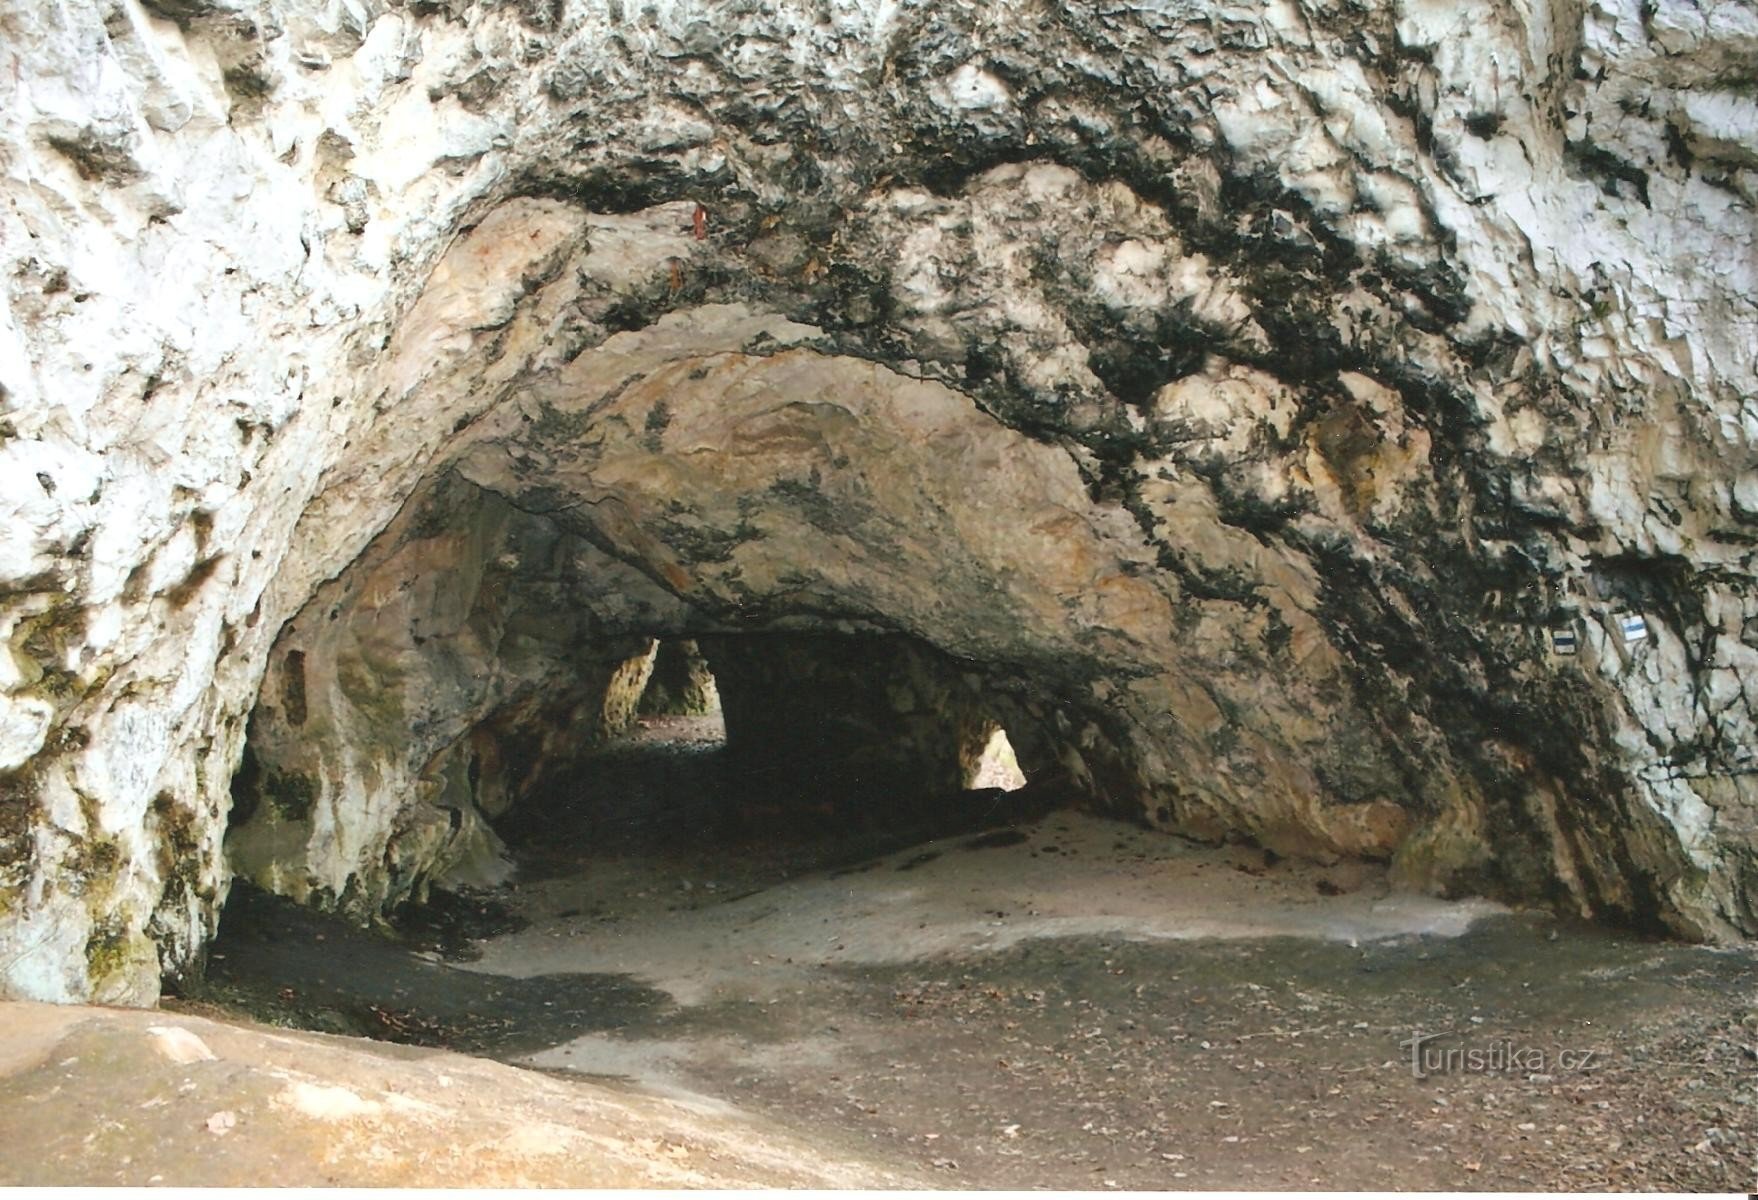 Grotte de Jachymka